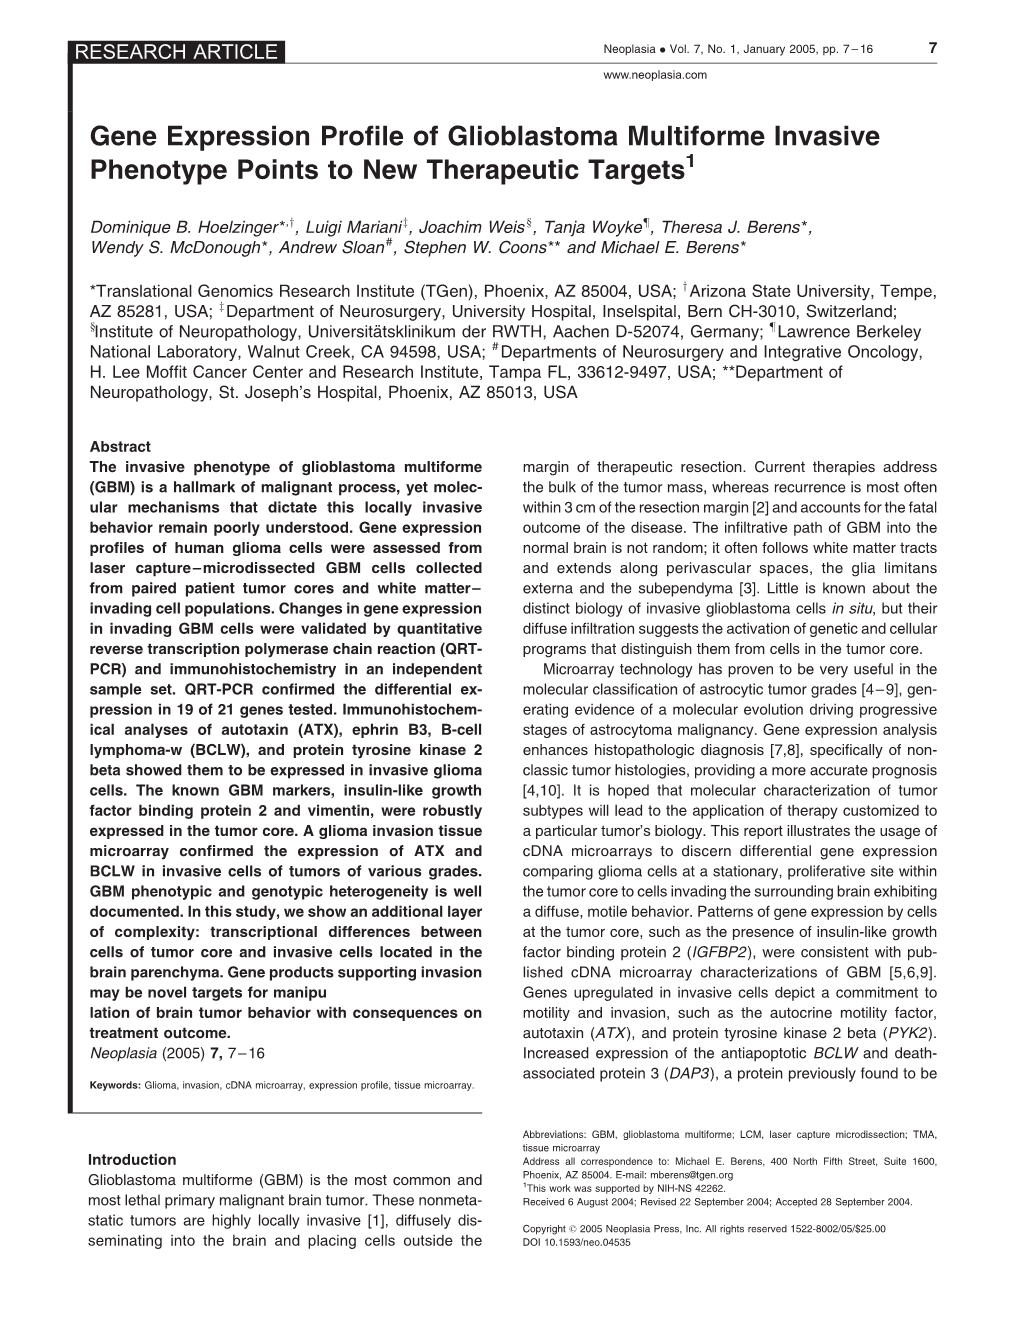 Gene Expression Profile of Glioblastoma Multiforme Invasive Phenotype Points to New Therapeutic Targets1